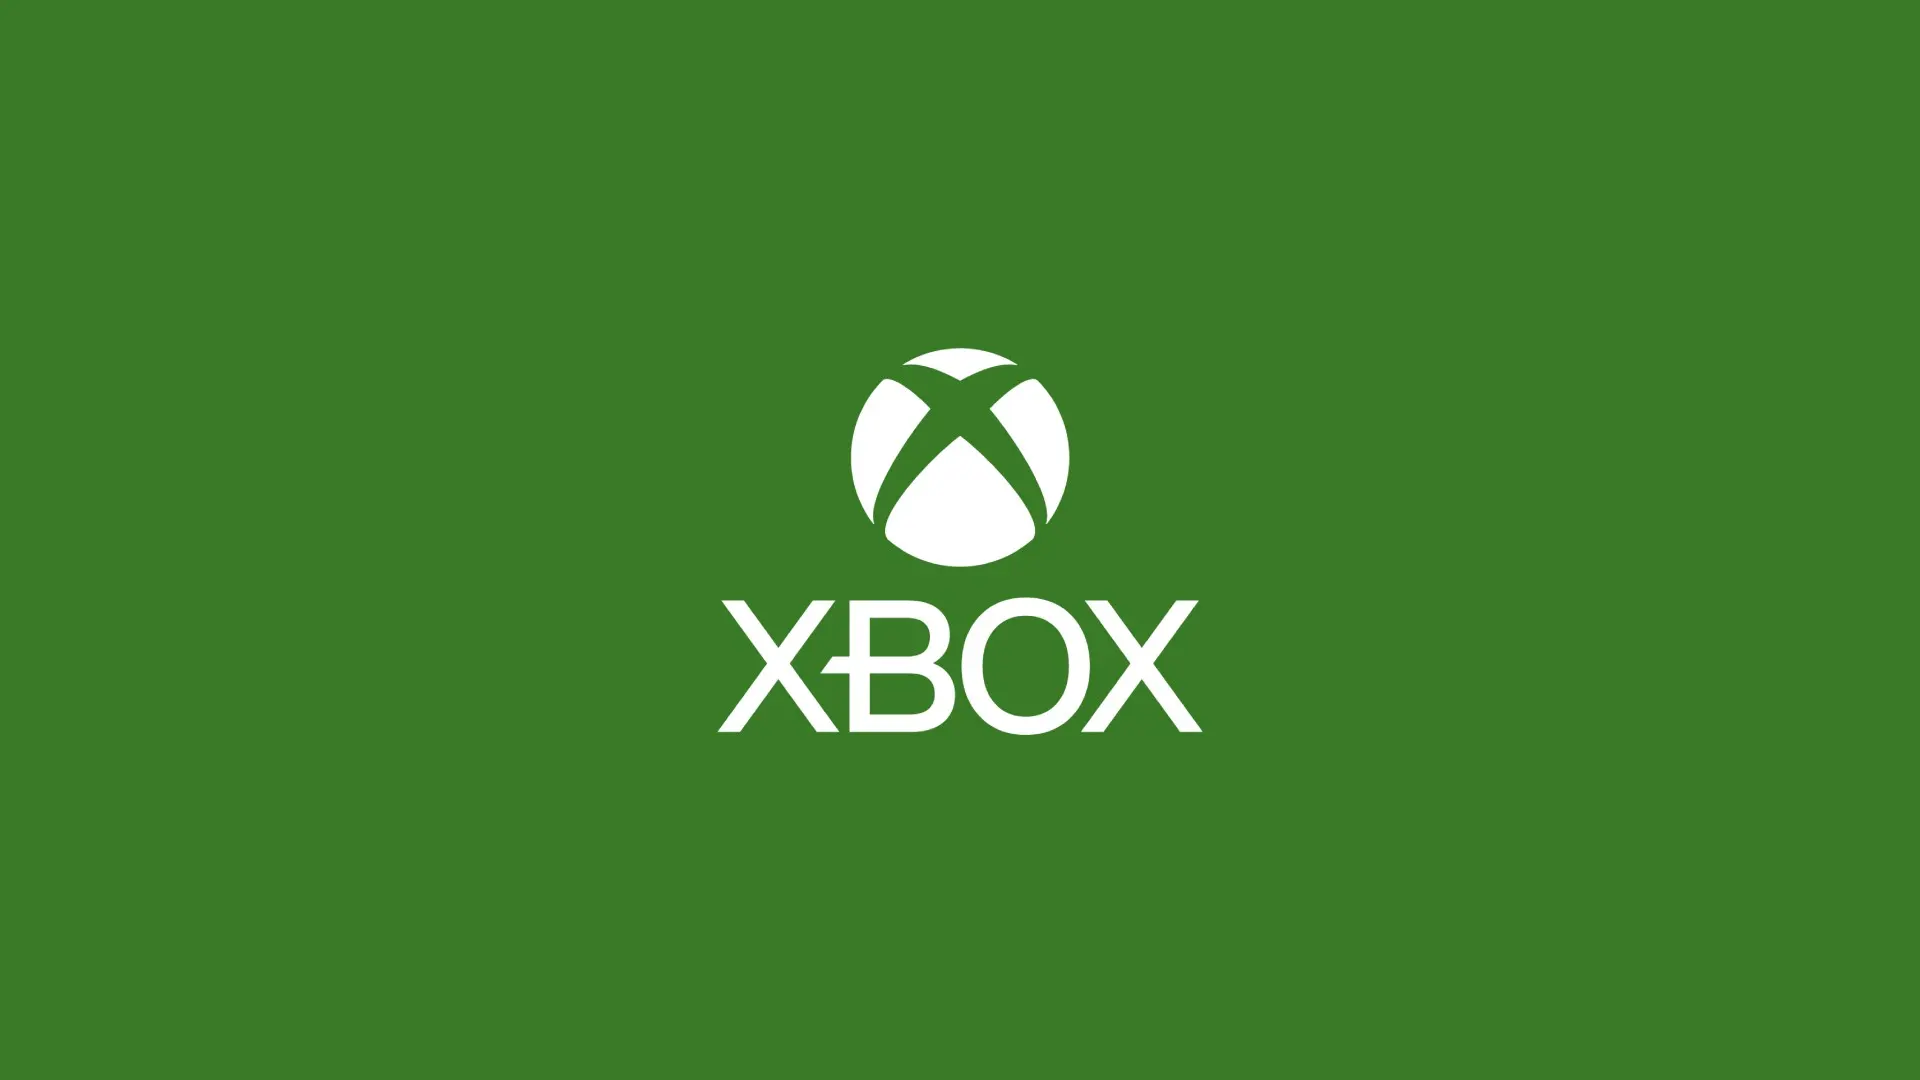 Xbox services